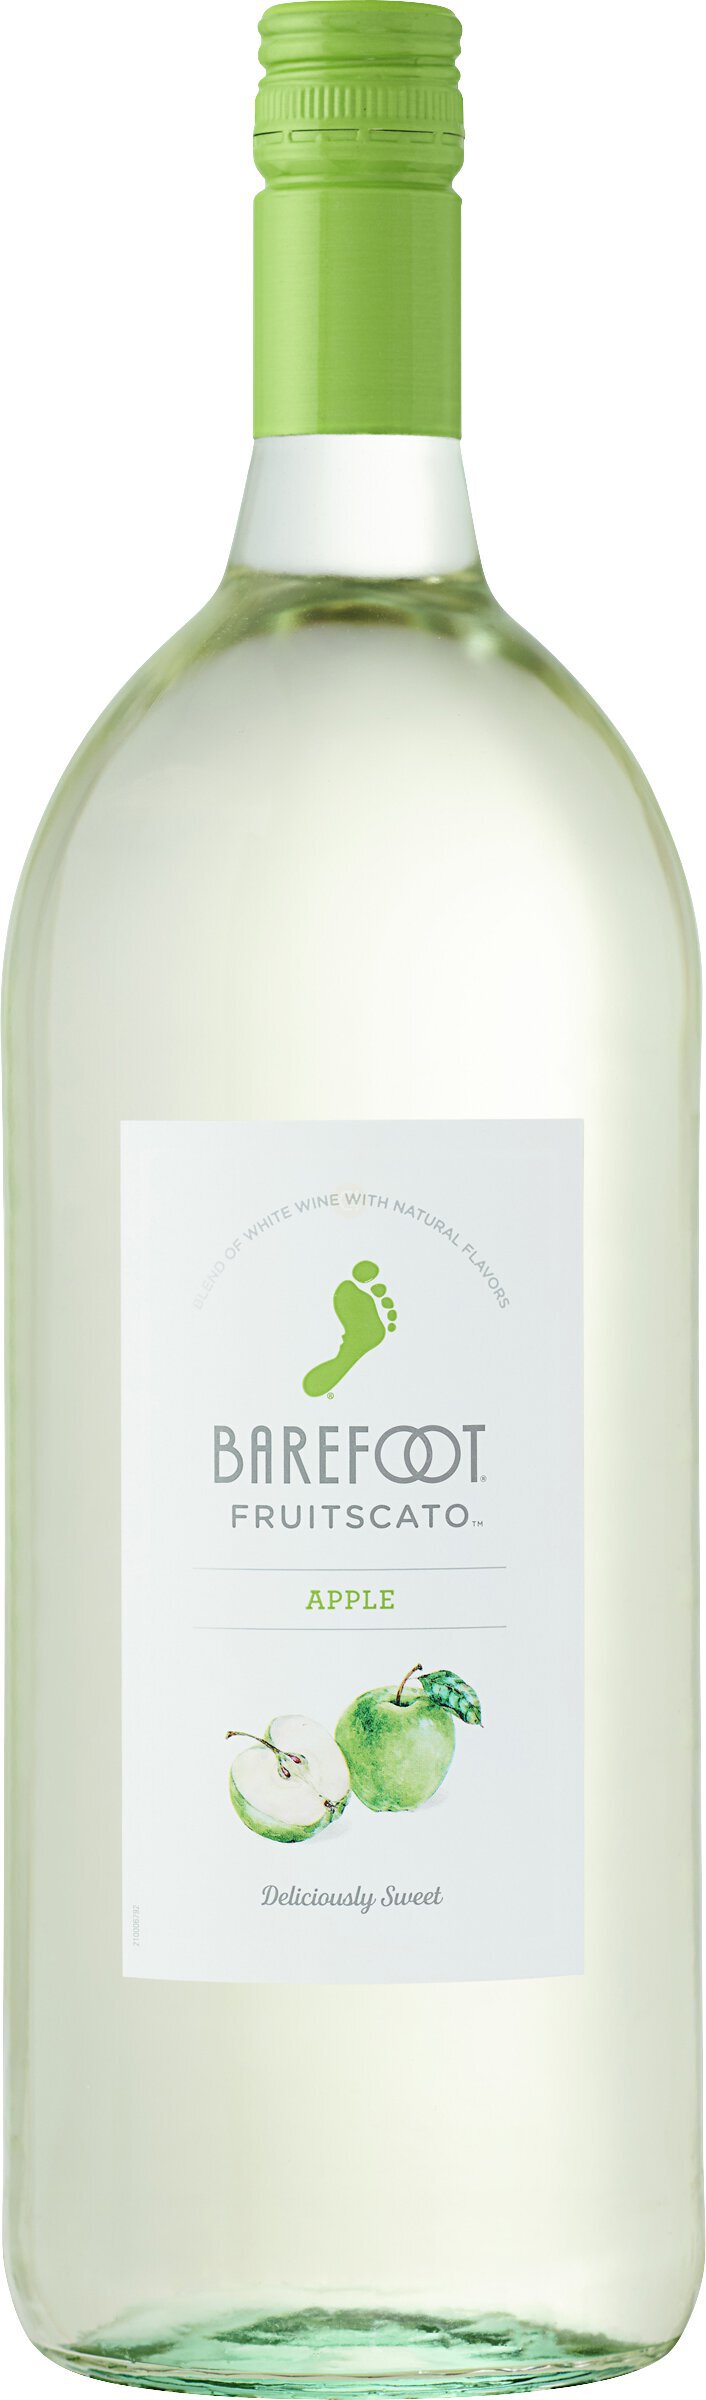 Barefoot Fruitscato Apple 750 ml